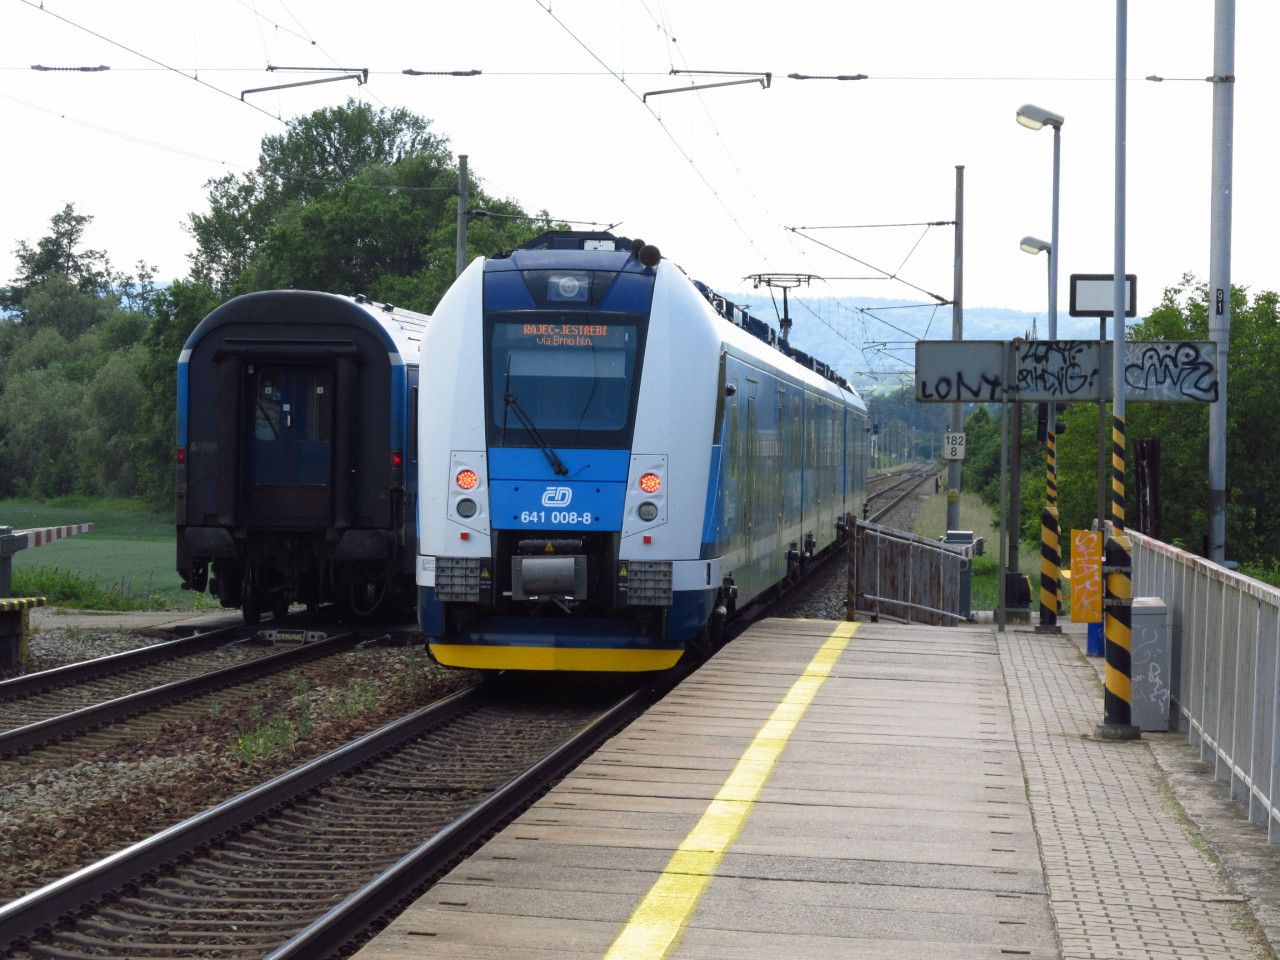 Os vlak jel z Rjce-J. smr Brno, pesto nadle ml na displeji uveden cl 